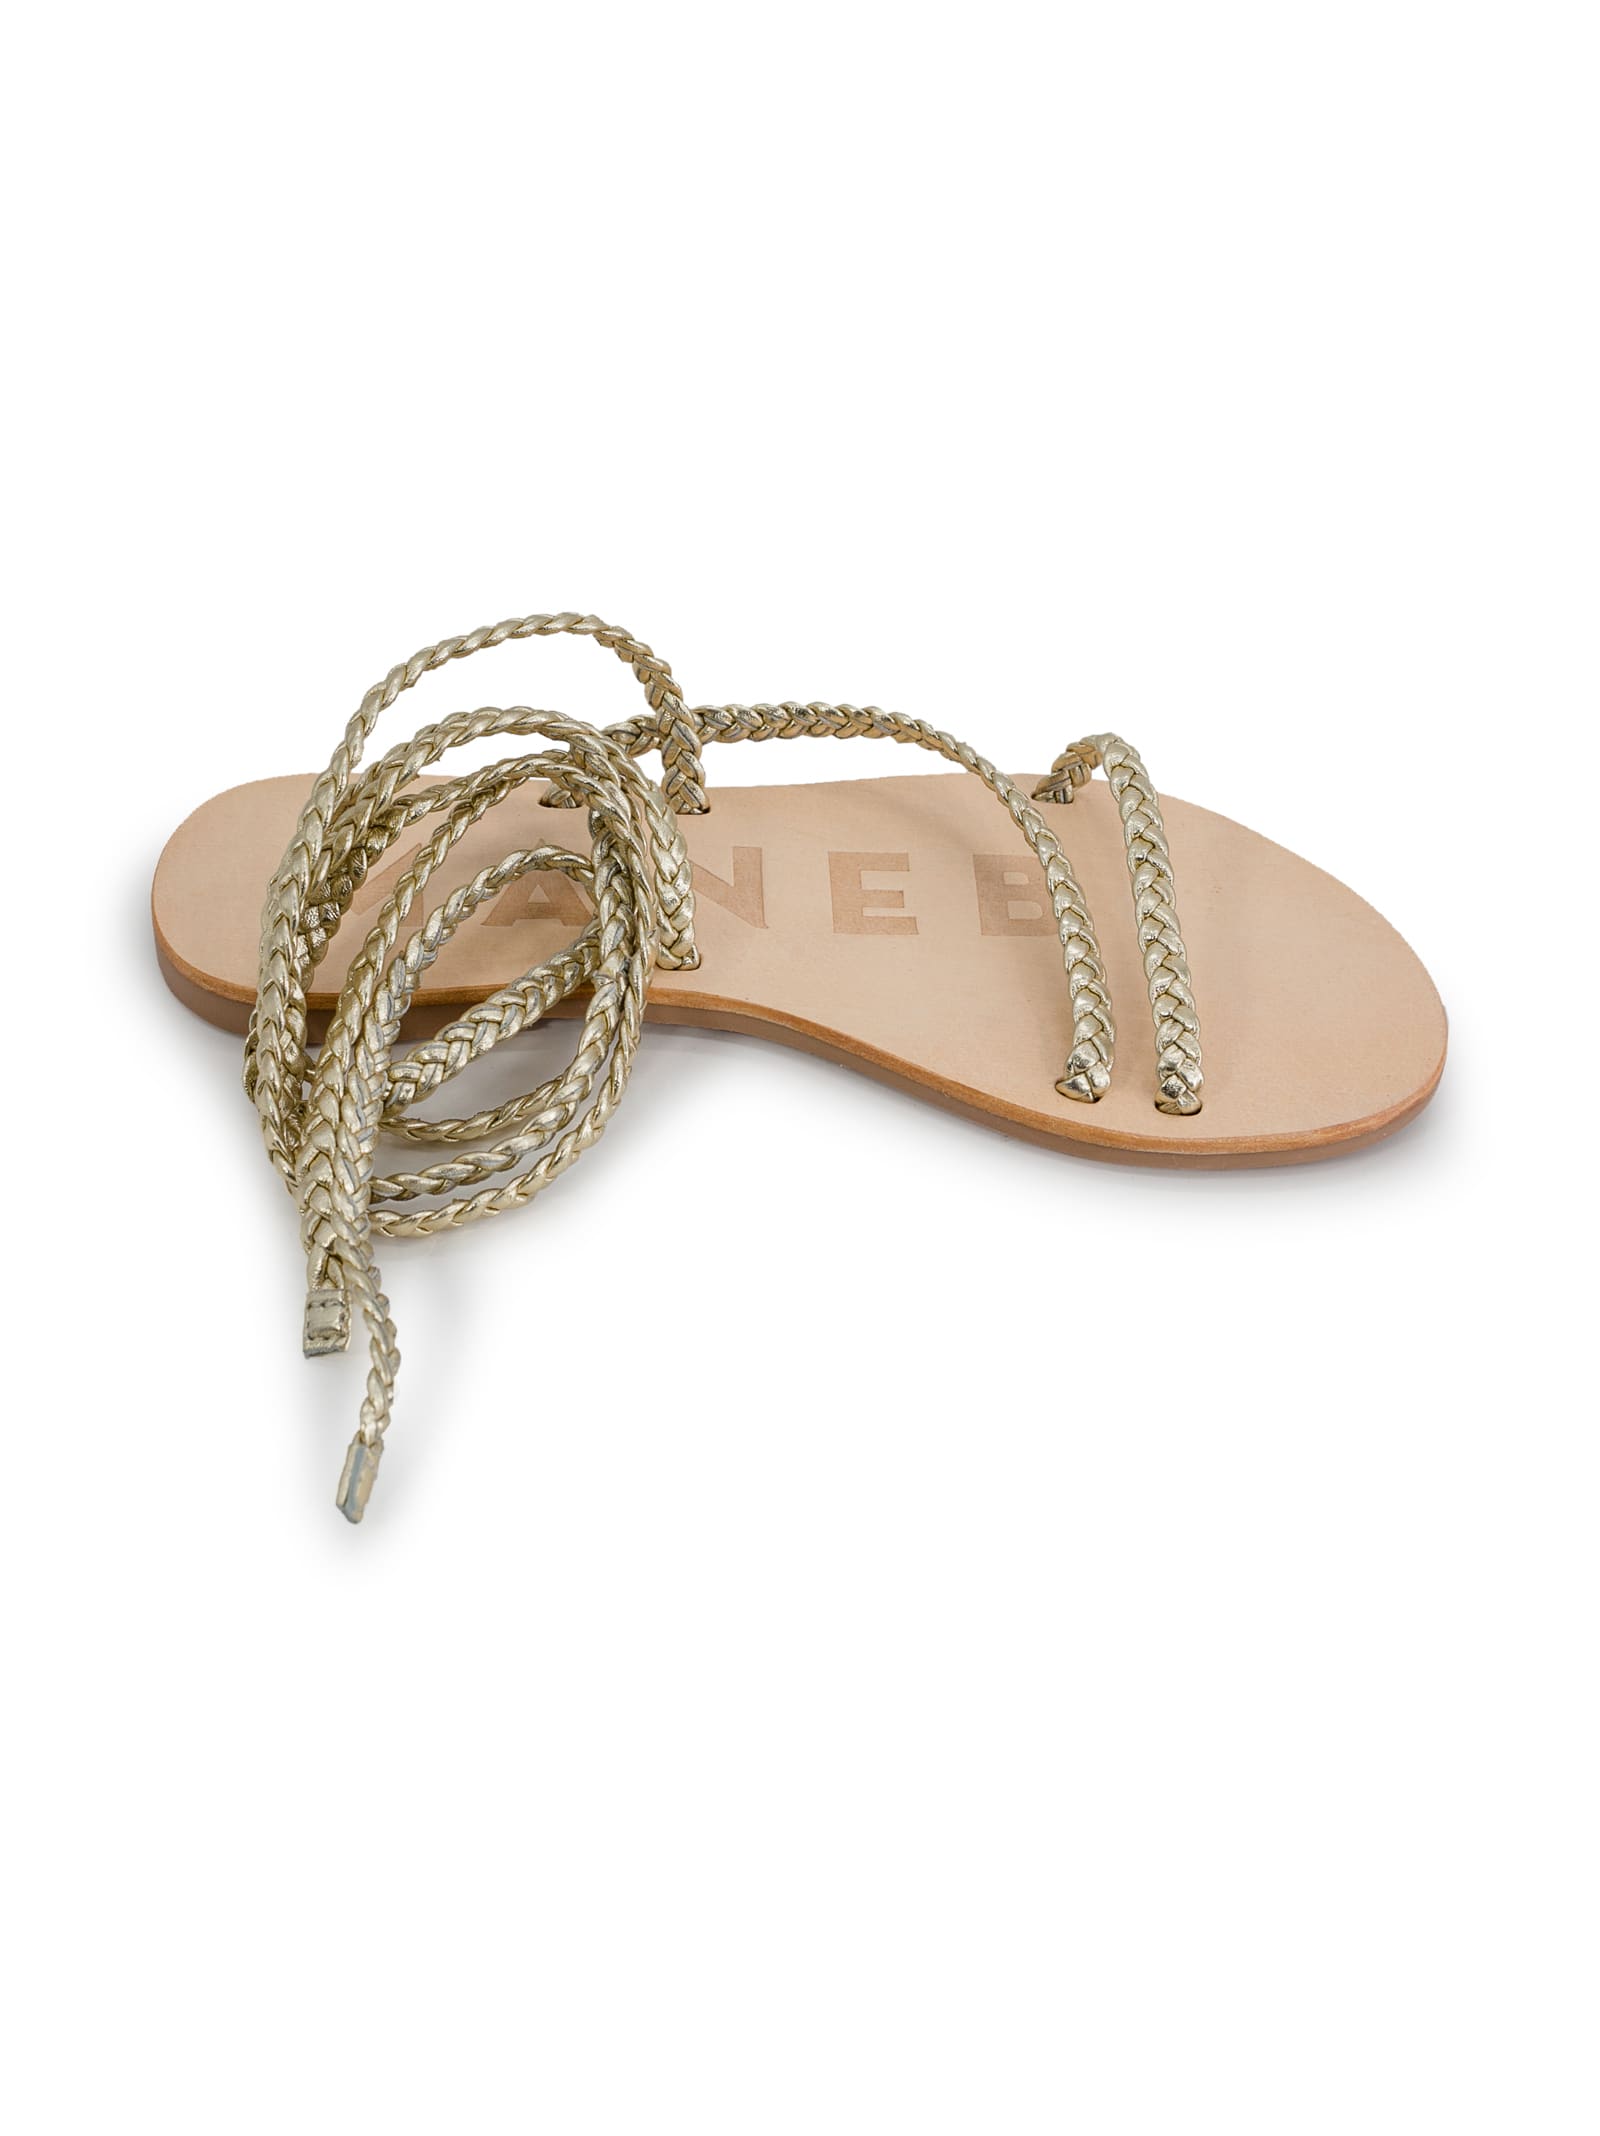 Shop Manebi Leather Sandals Tie-up Multi Braid Bands Canyon In Platinum Tie-up Multi Braid Ba